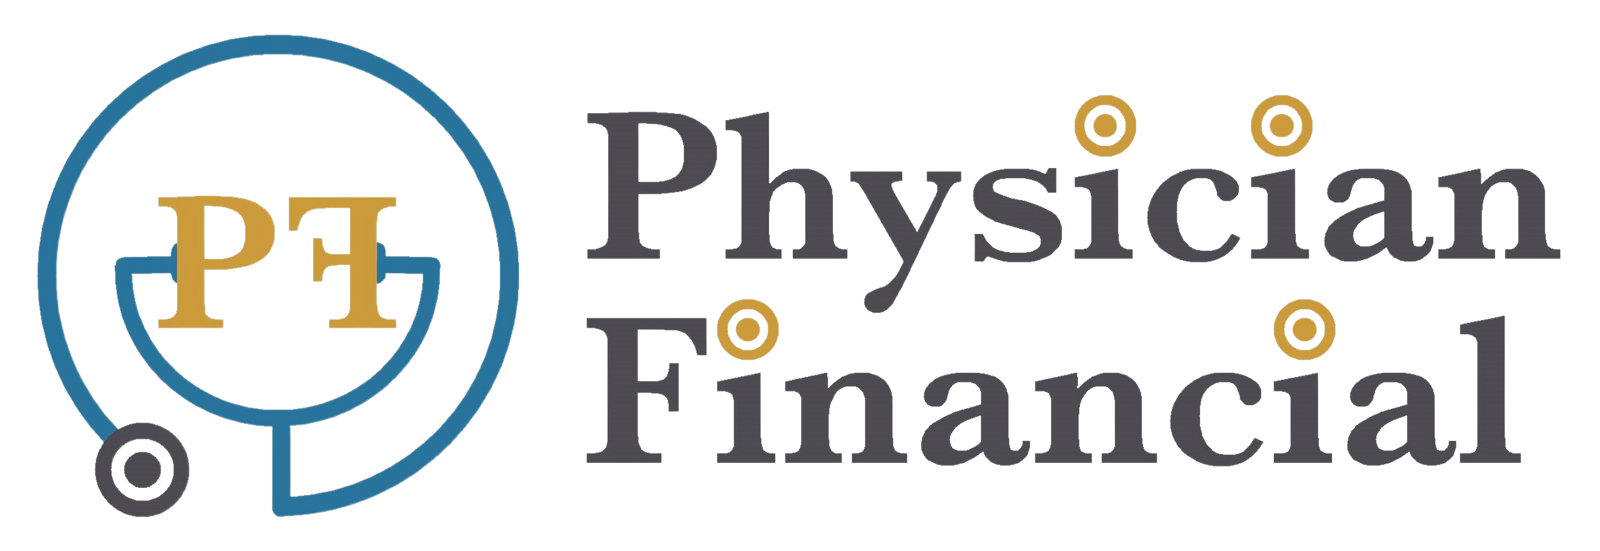 Physician Financial - Northwestern Mutual